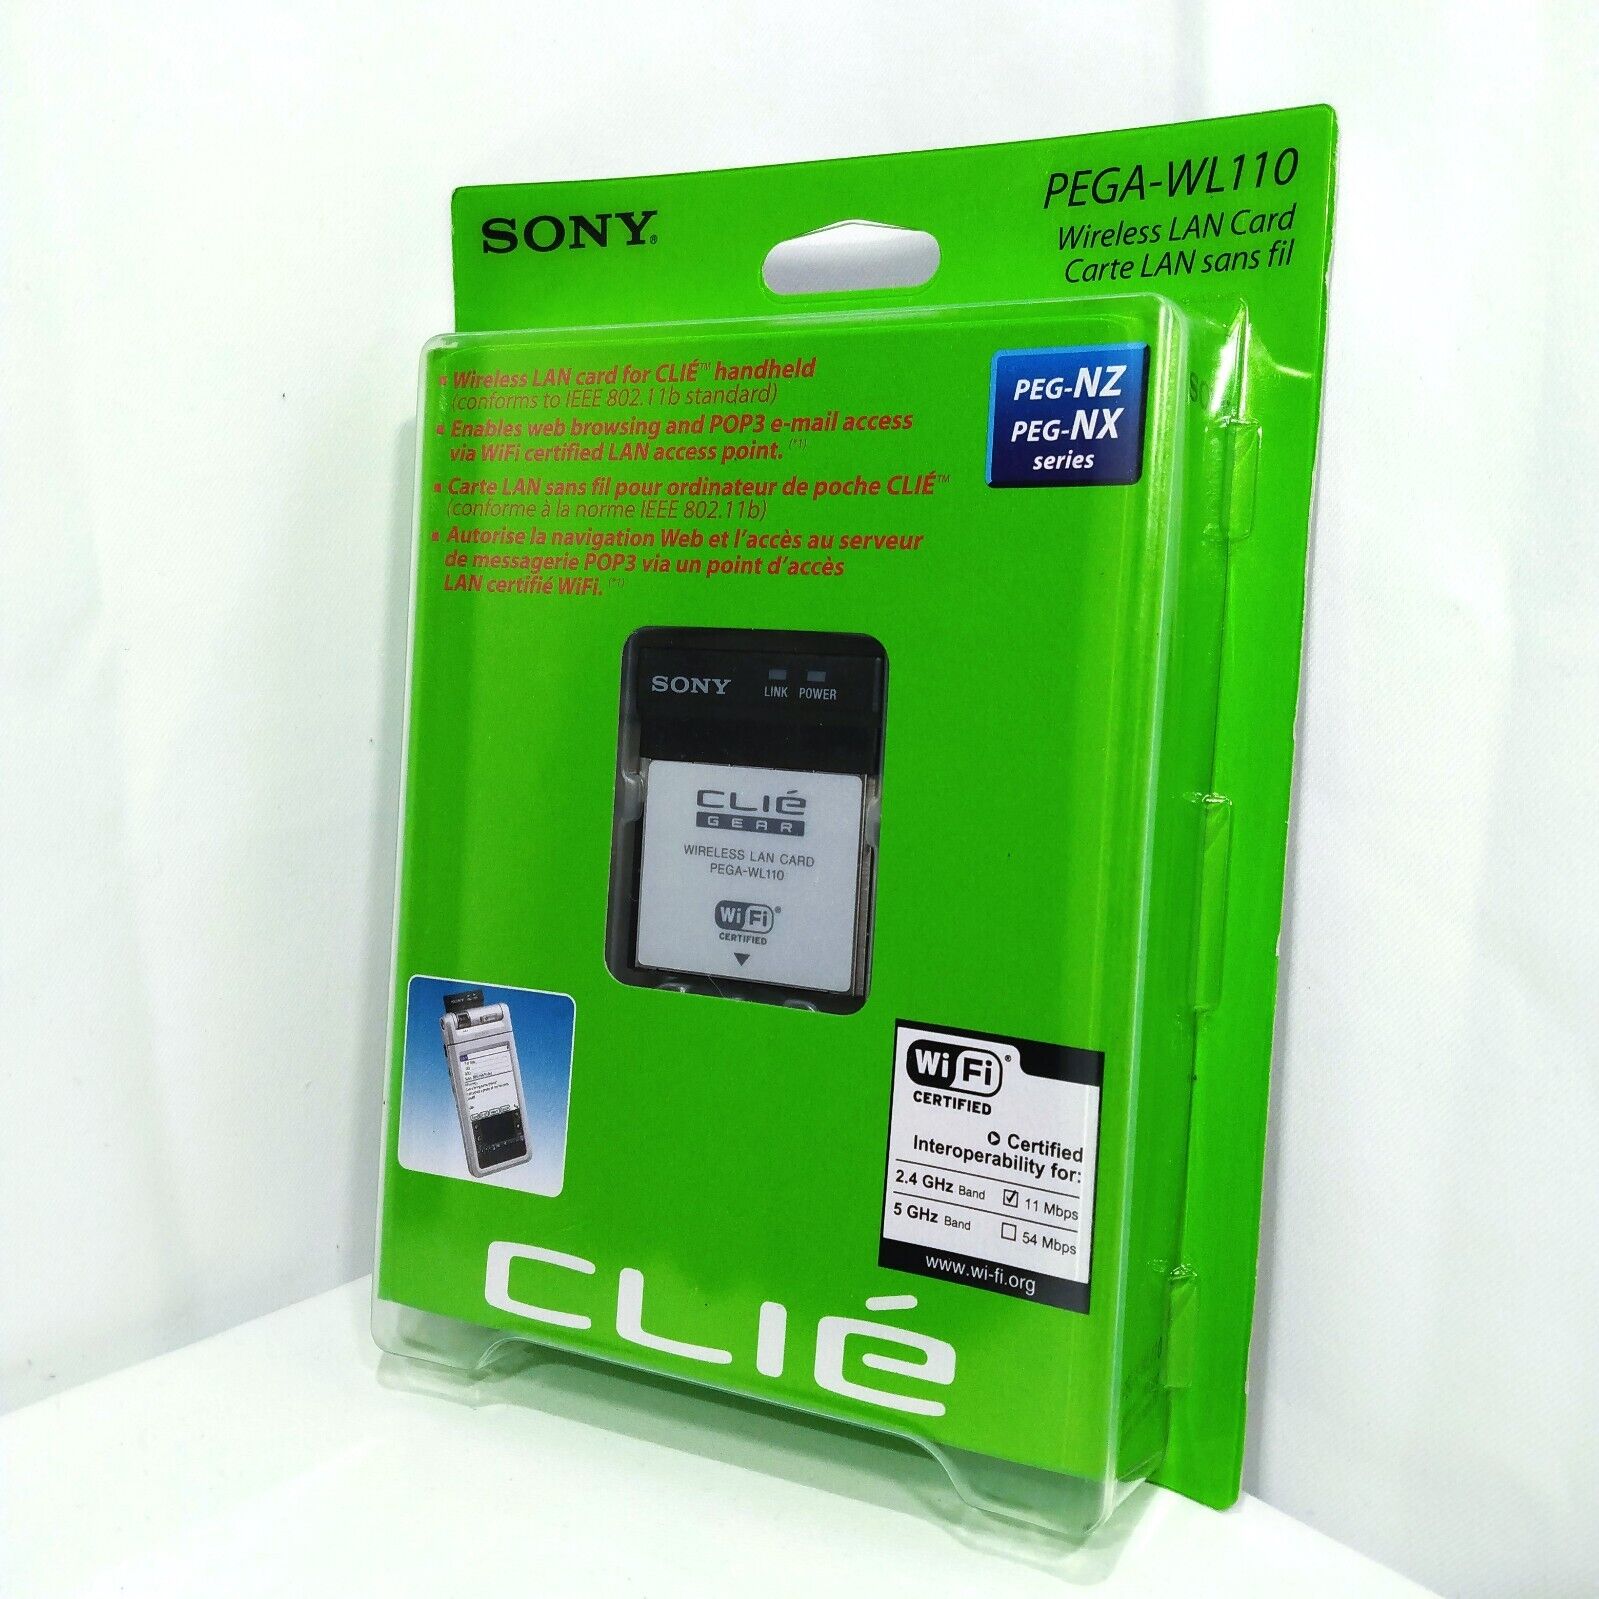 Sony Clie PEGA-WL110 Wireless LAN Card for PEG-NZ & PEG-NX New Old Stock RARE